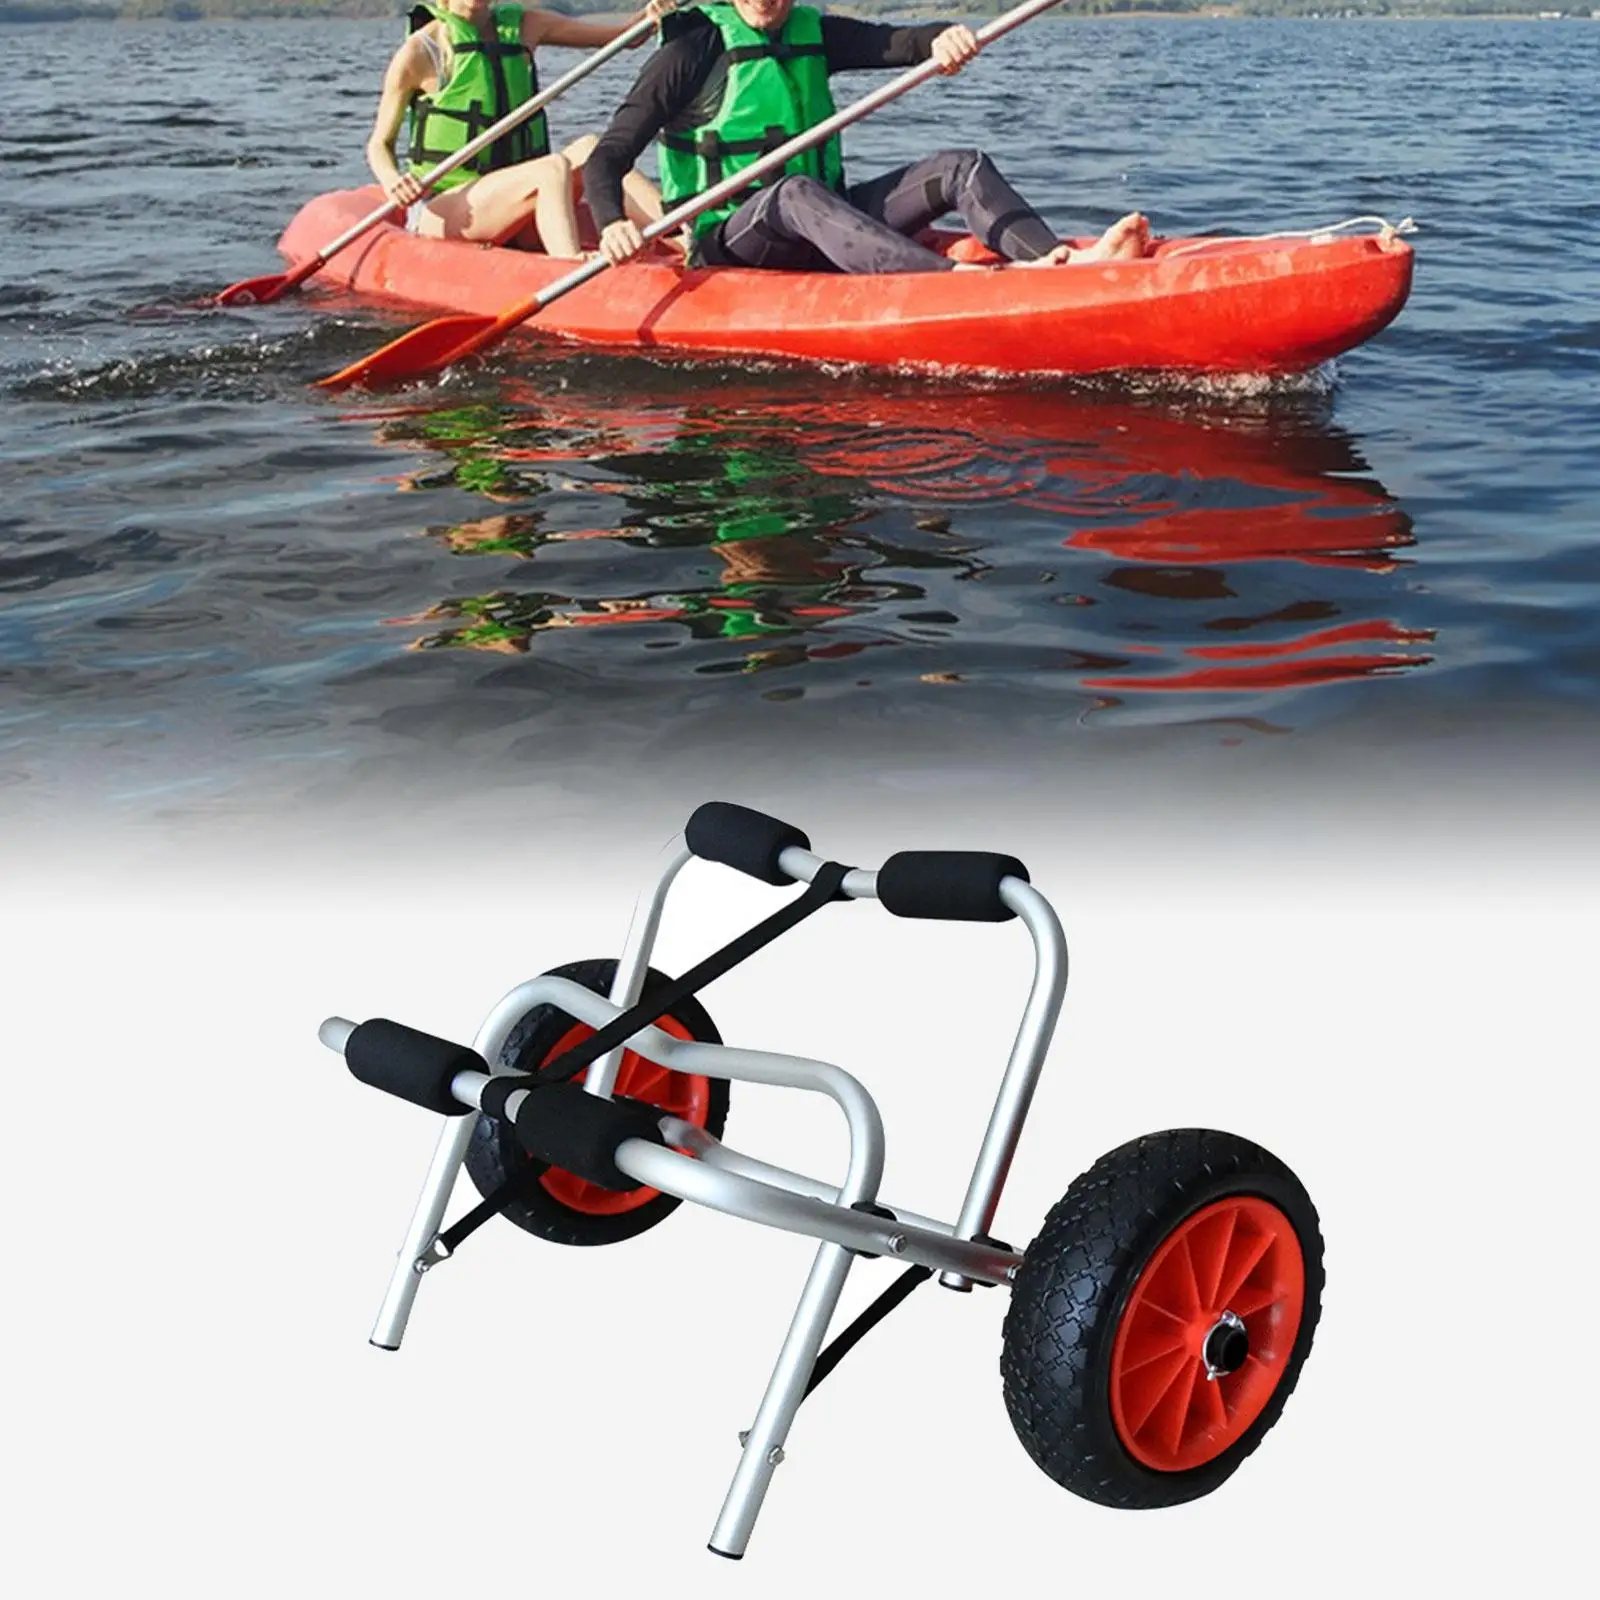 Kayak Cart Kayak Trolley Kayak Kayak Trailer Carrying Boat Cart Kayak Carrier Trolley Canoe Carrier for Paddle Board